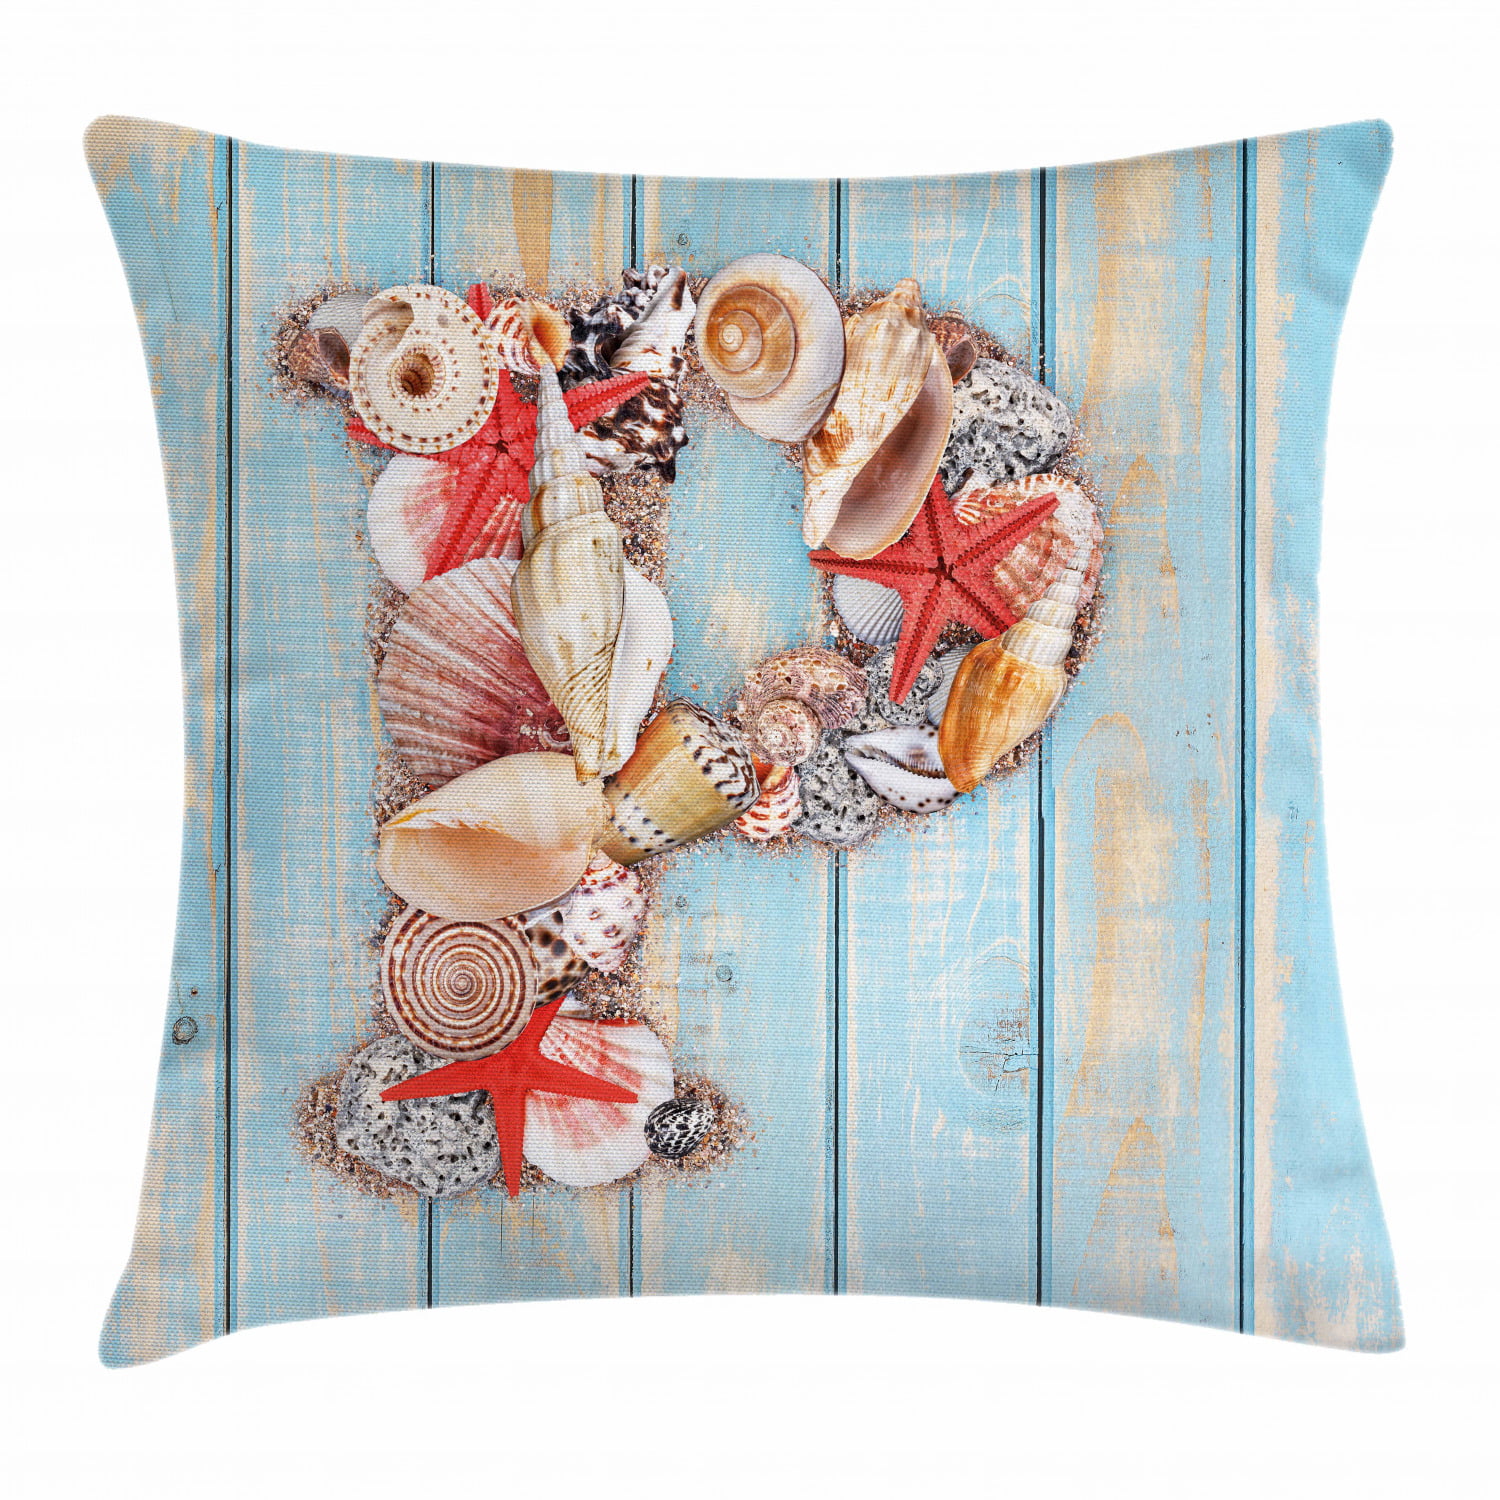 US SELLER wholesale 10pcs sea life seashell beach cushion covers decor pillow 